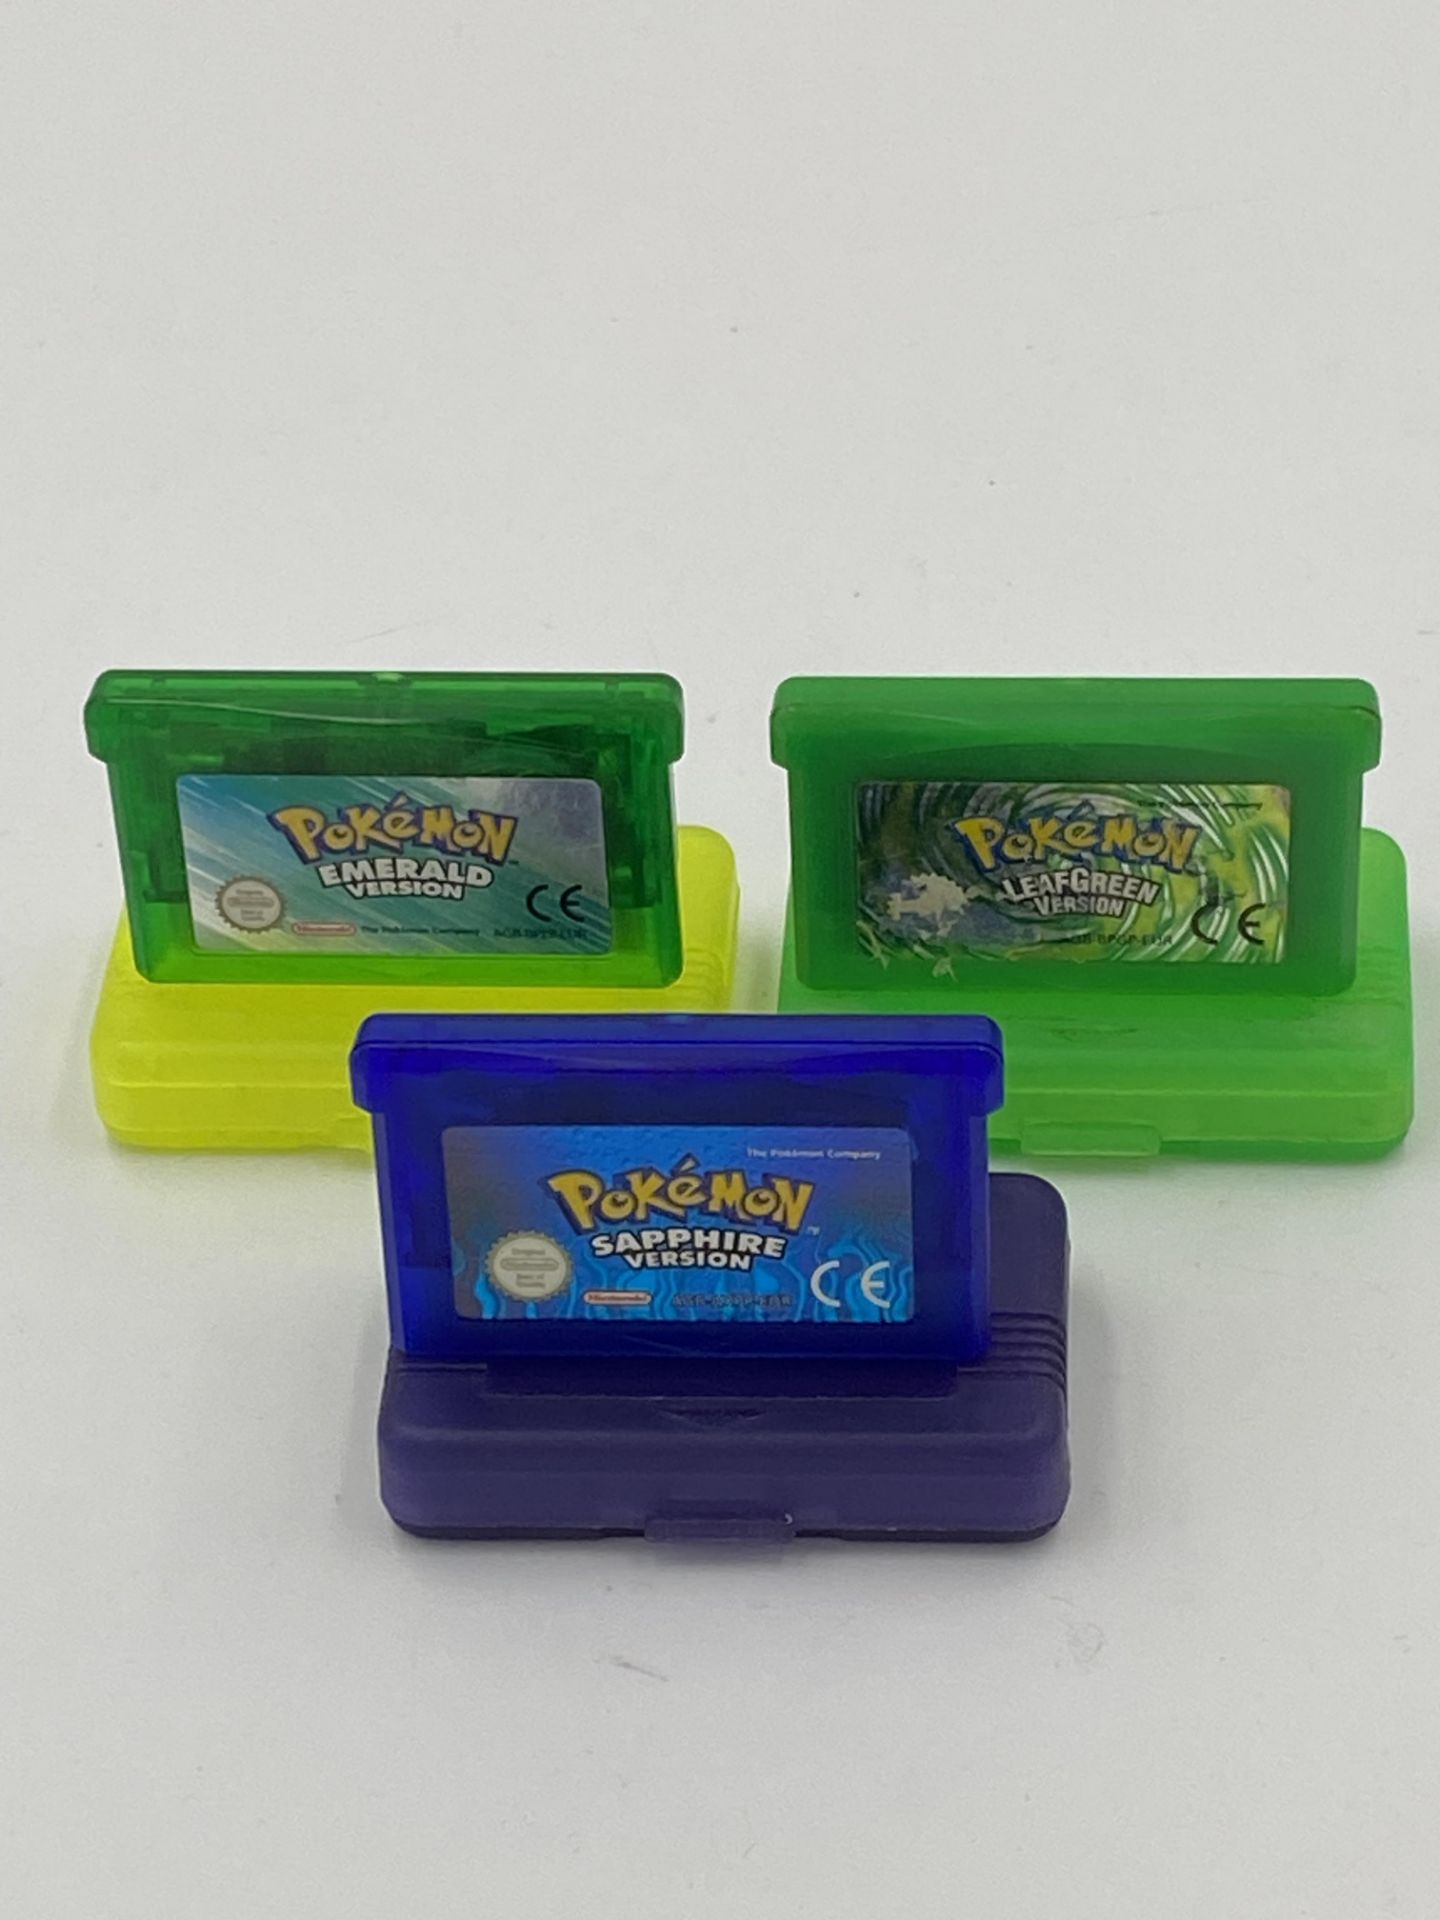 Three Game Boy Advance games, Pokemon Emerald; Pokemon Leafgreen and Pokemon Sapphire